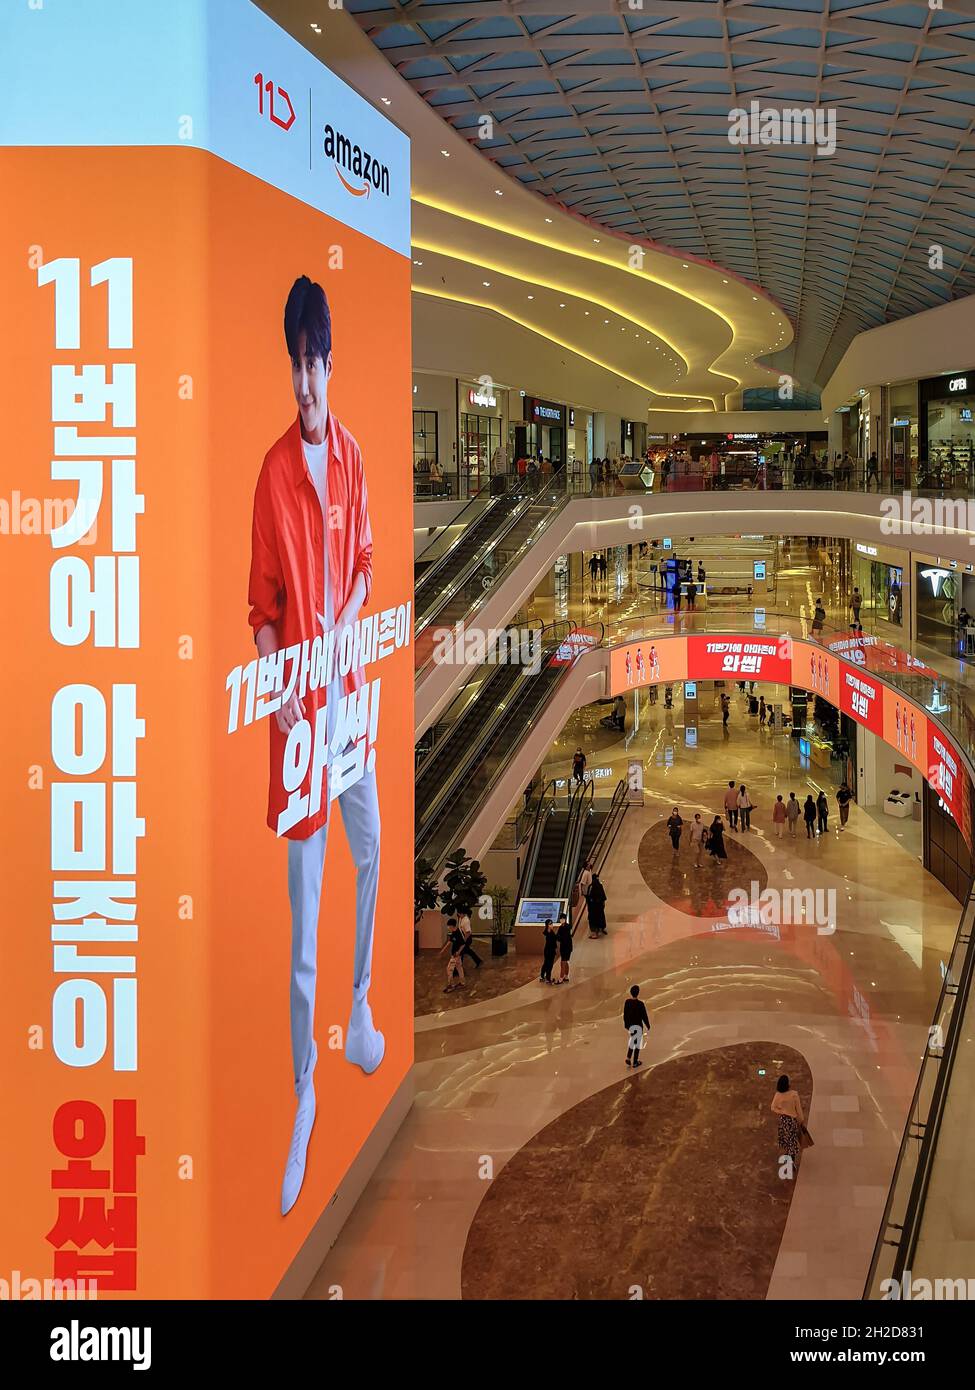 Hanam, Gyeonggi Province, South Korea - Amazon launching commercial starring Kim Seon-ho, a rising actor through Hometown Cha-Cha-Cha. Stock Photo